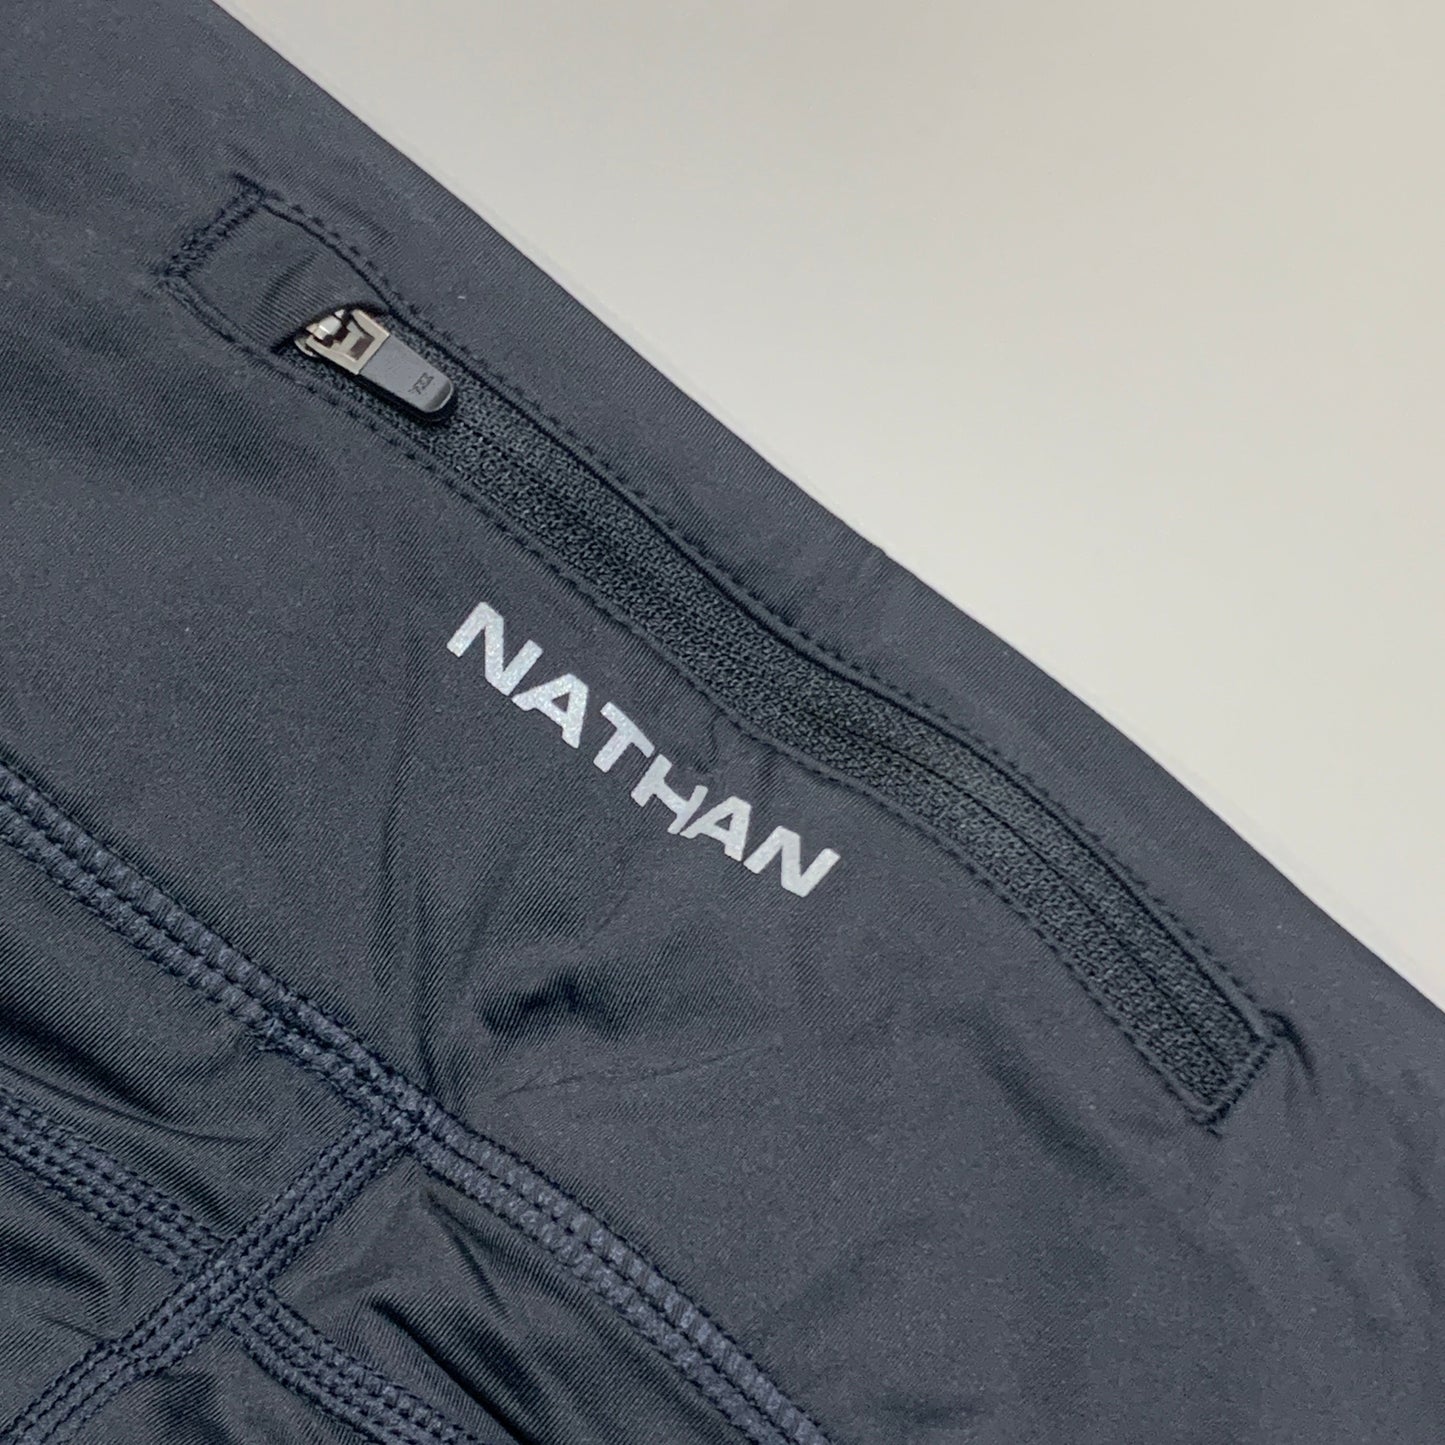 NATHAN Interval 3" Inseam Bike Short Women's Black Size XS NS51040-00001-XS